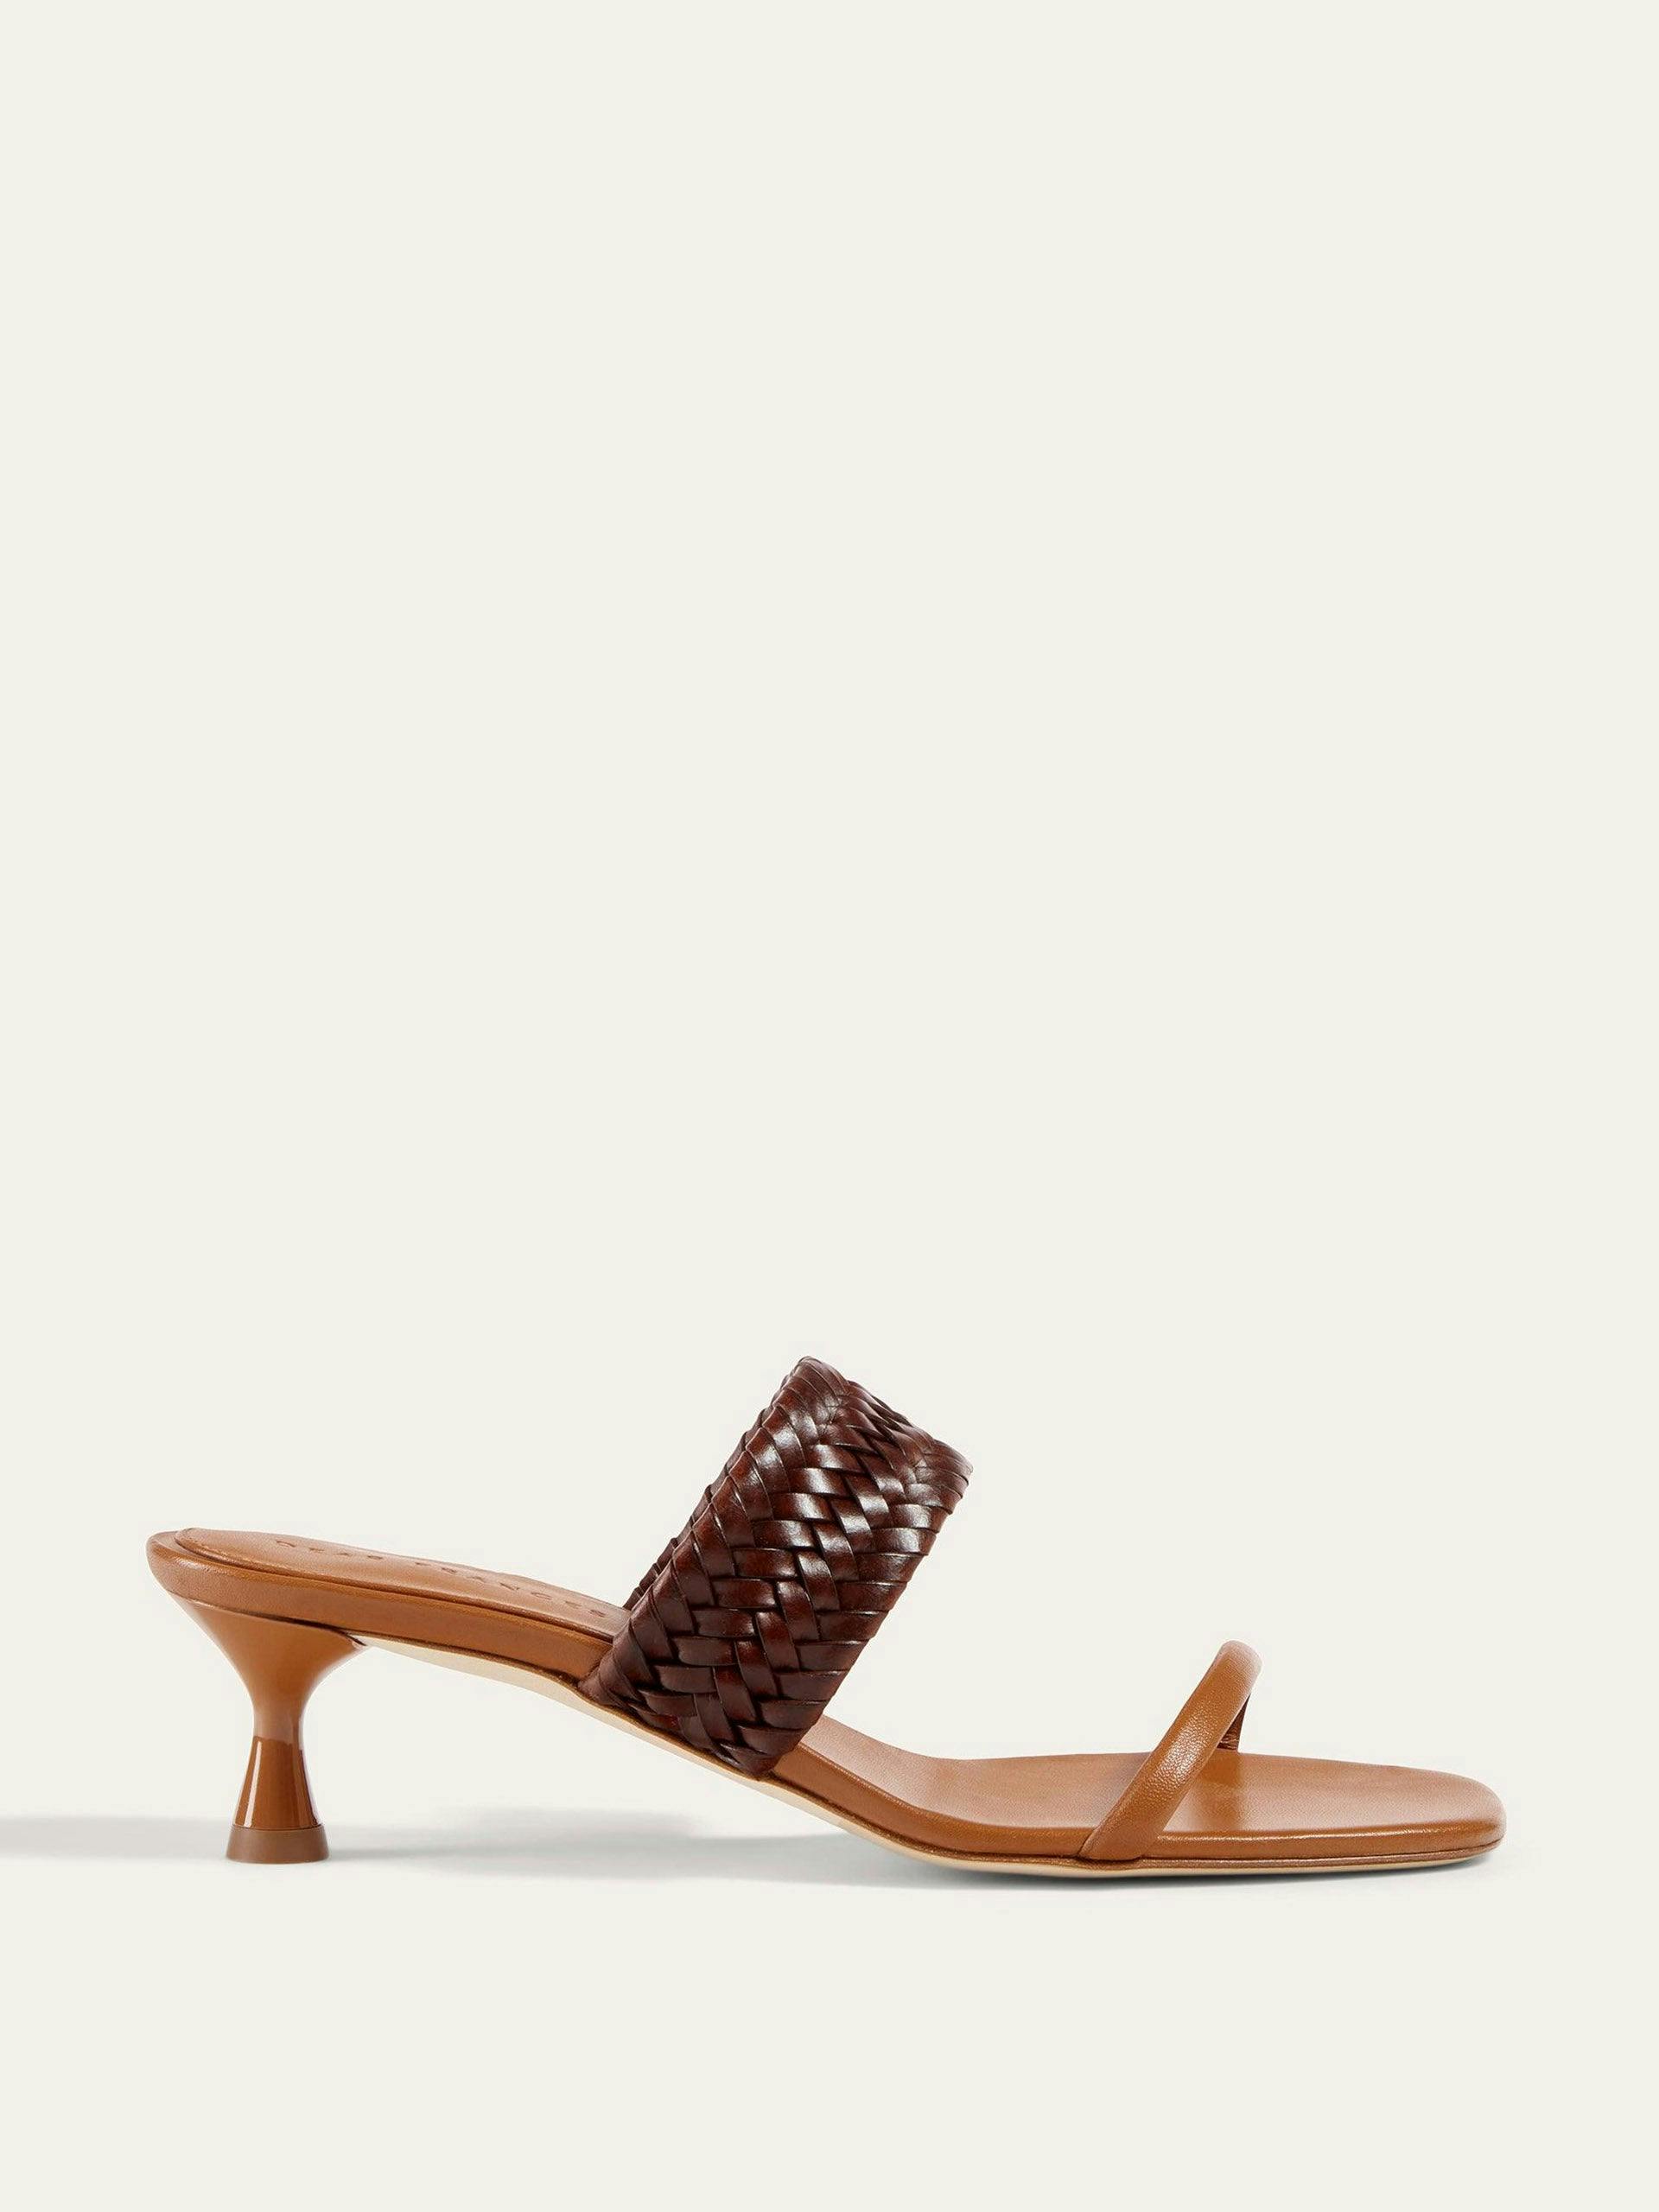 Bow tan sandal